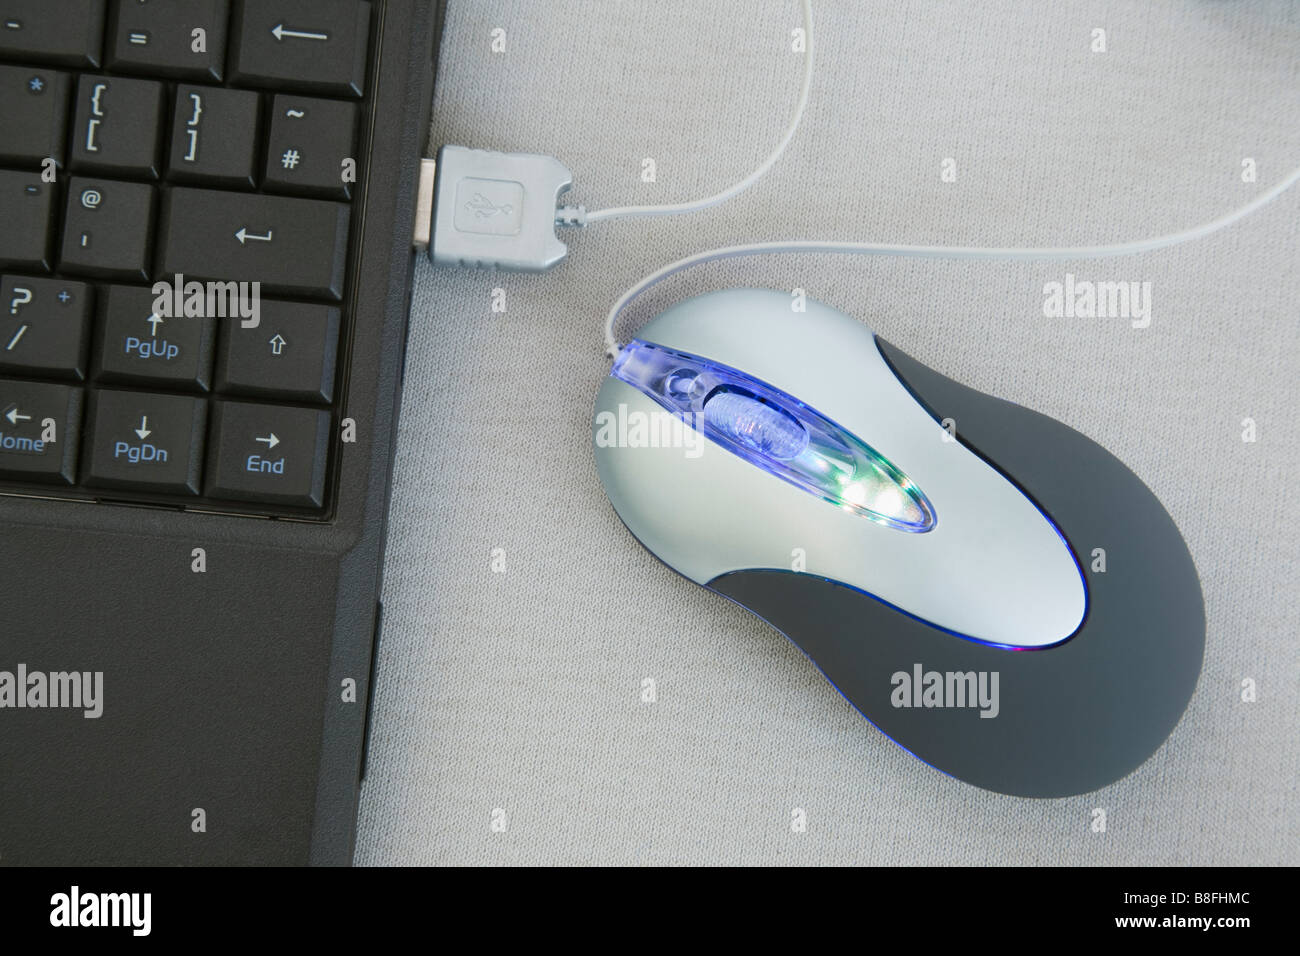 Studio Still Life Illuminated mouse connected to USB port on laptop computer Stock Photo